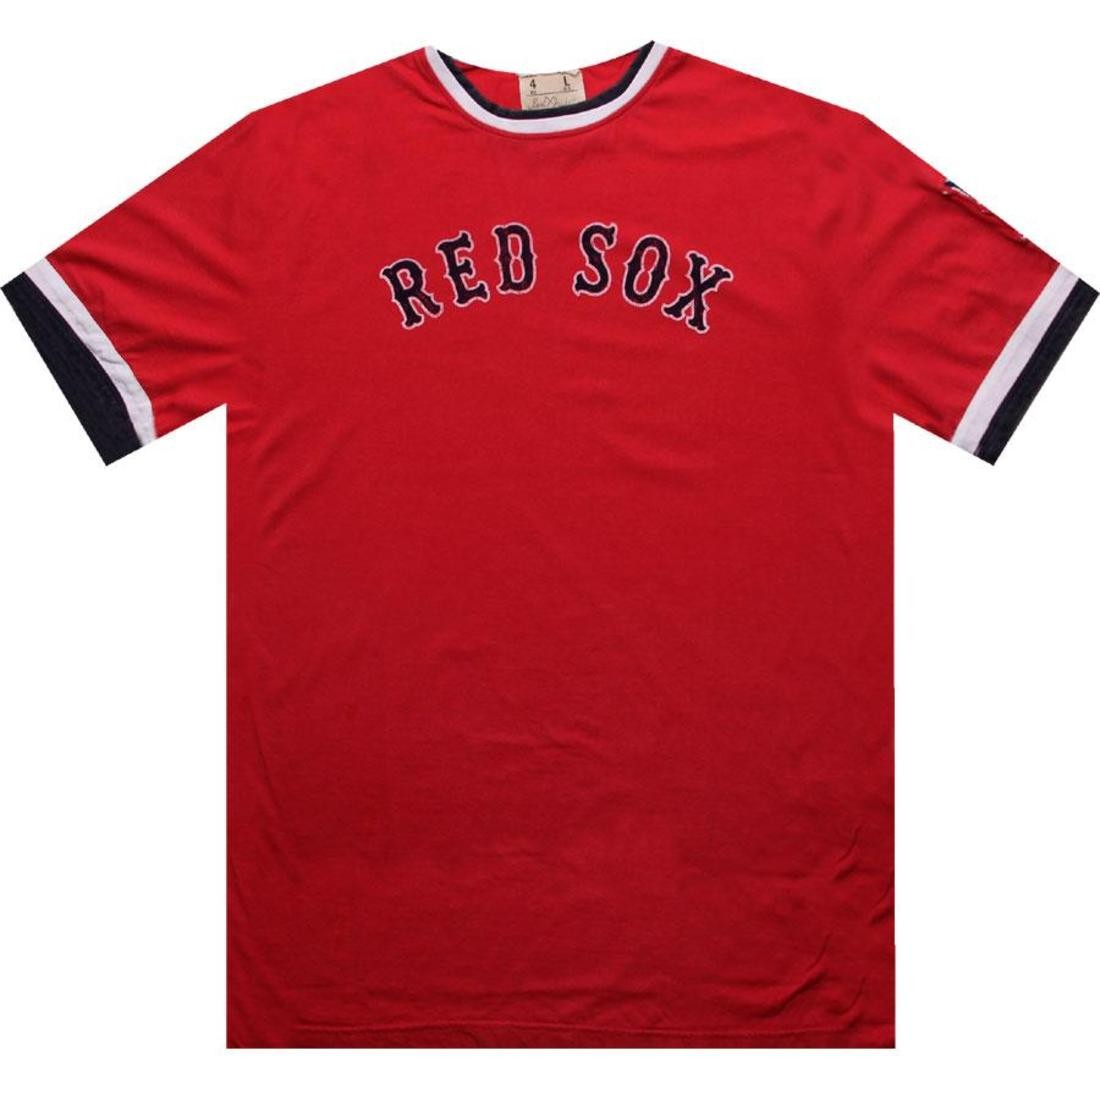 boston red sox tee shirts